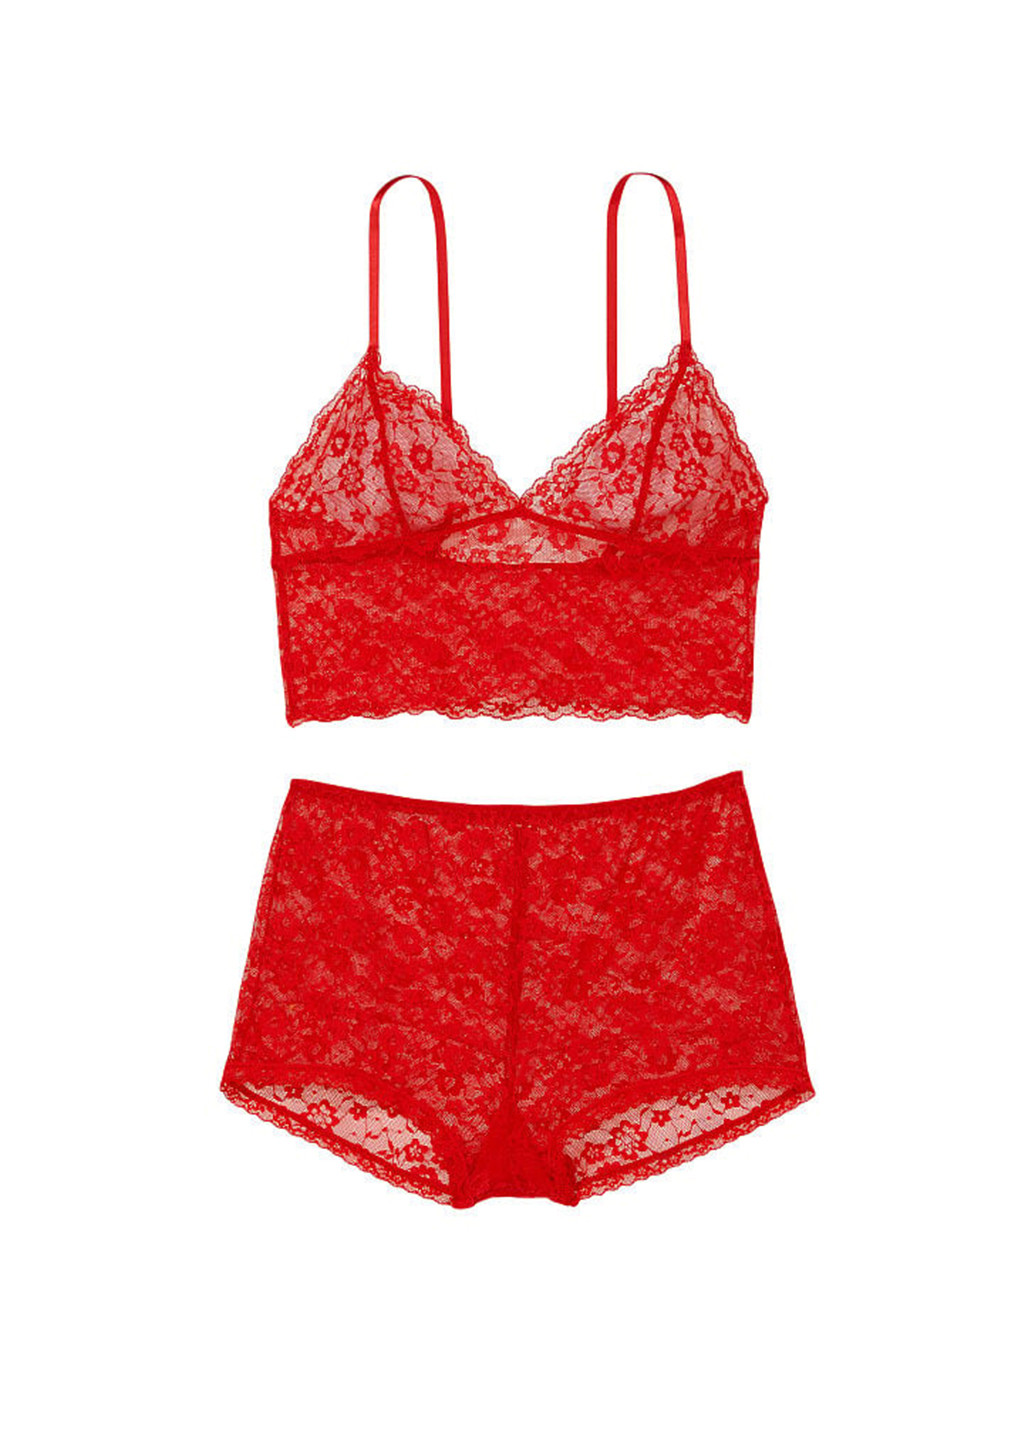 Червона всесезон піжама (топ, шорти) топ + шорти Victoria's Secret